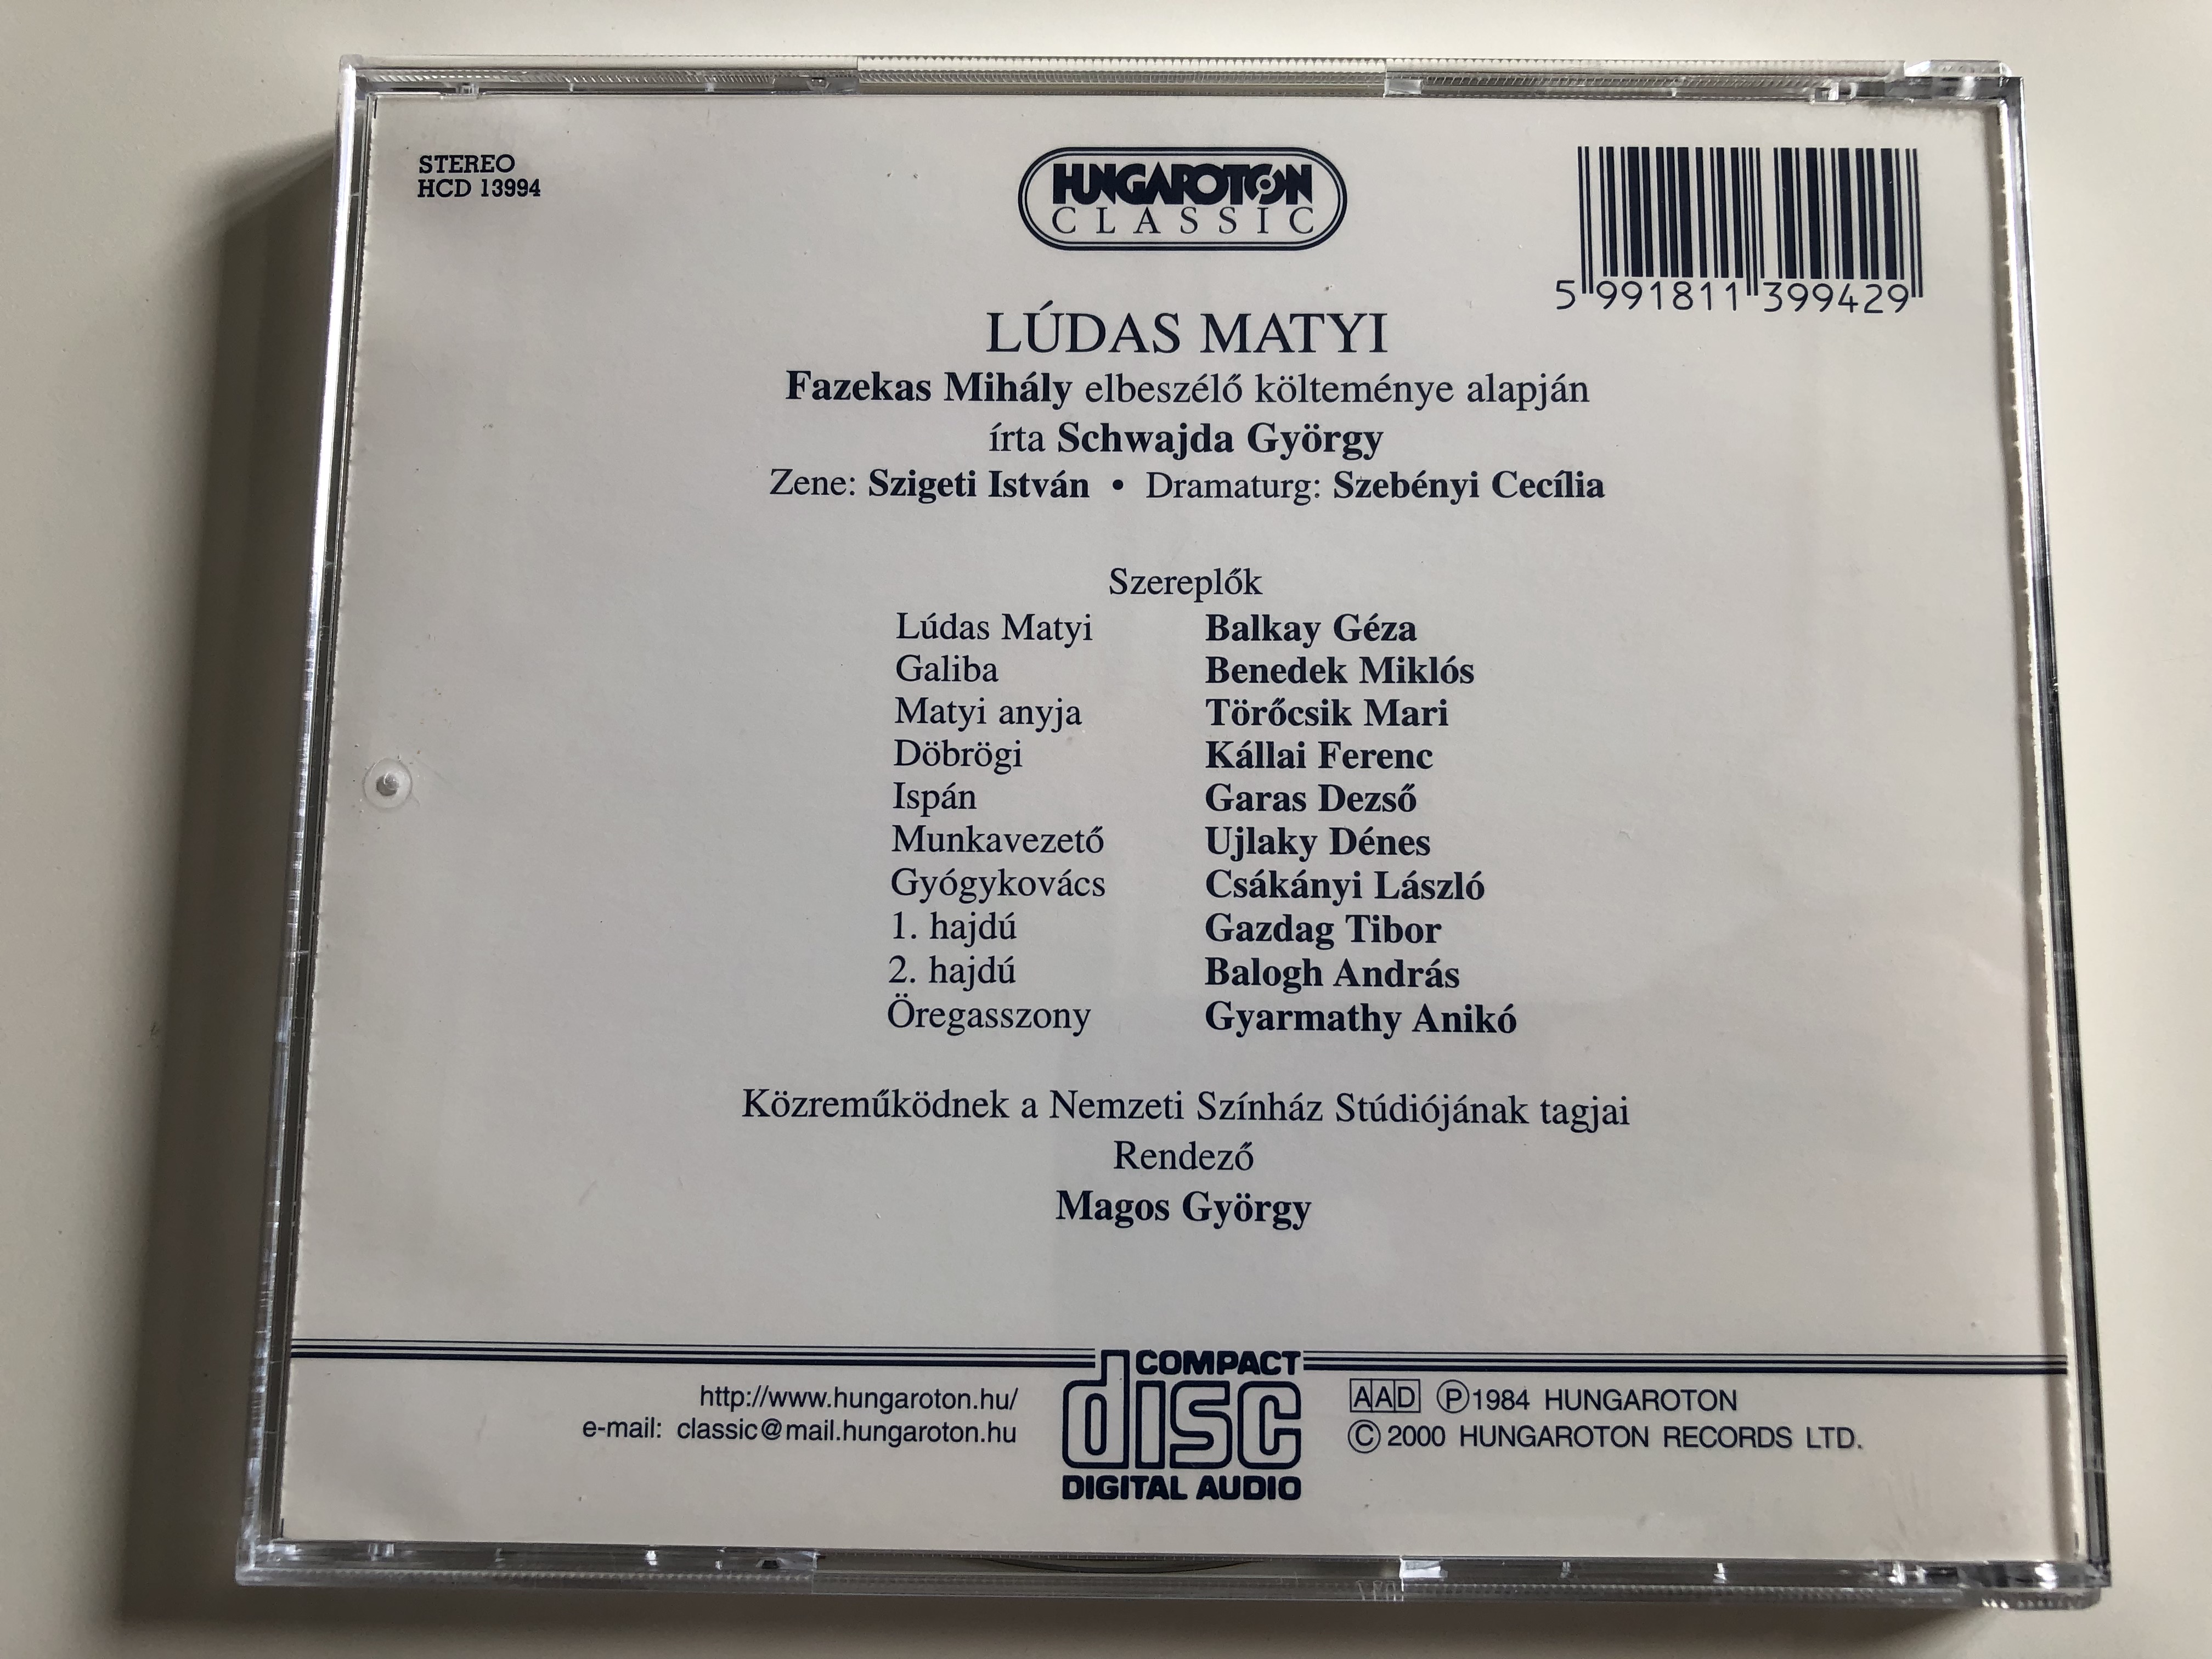 ludas-matyi-schwajda-gy-rgy-mesej-t-ka-hungarian-children-s-radioplay-written-by-mih-ly-fazekas-adapted-by-schwajda-gy-rgy-directed-by-magos-gy-rgy-hcd-13994-hungaroton-classic-audio-cd-2000-4-.jpg